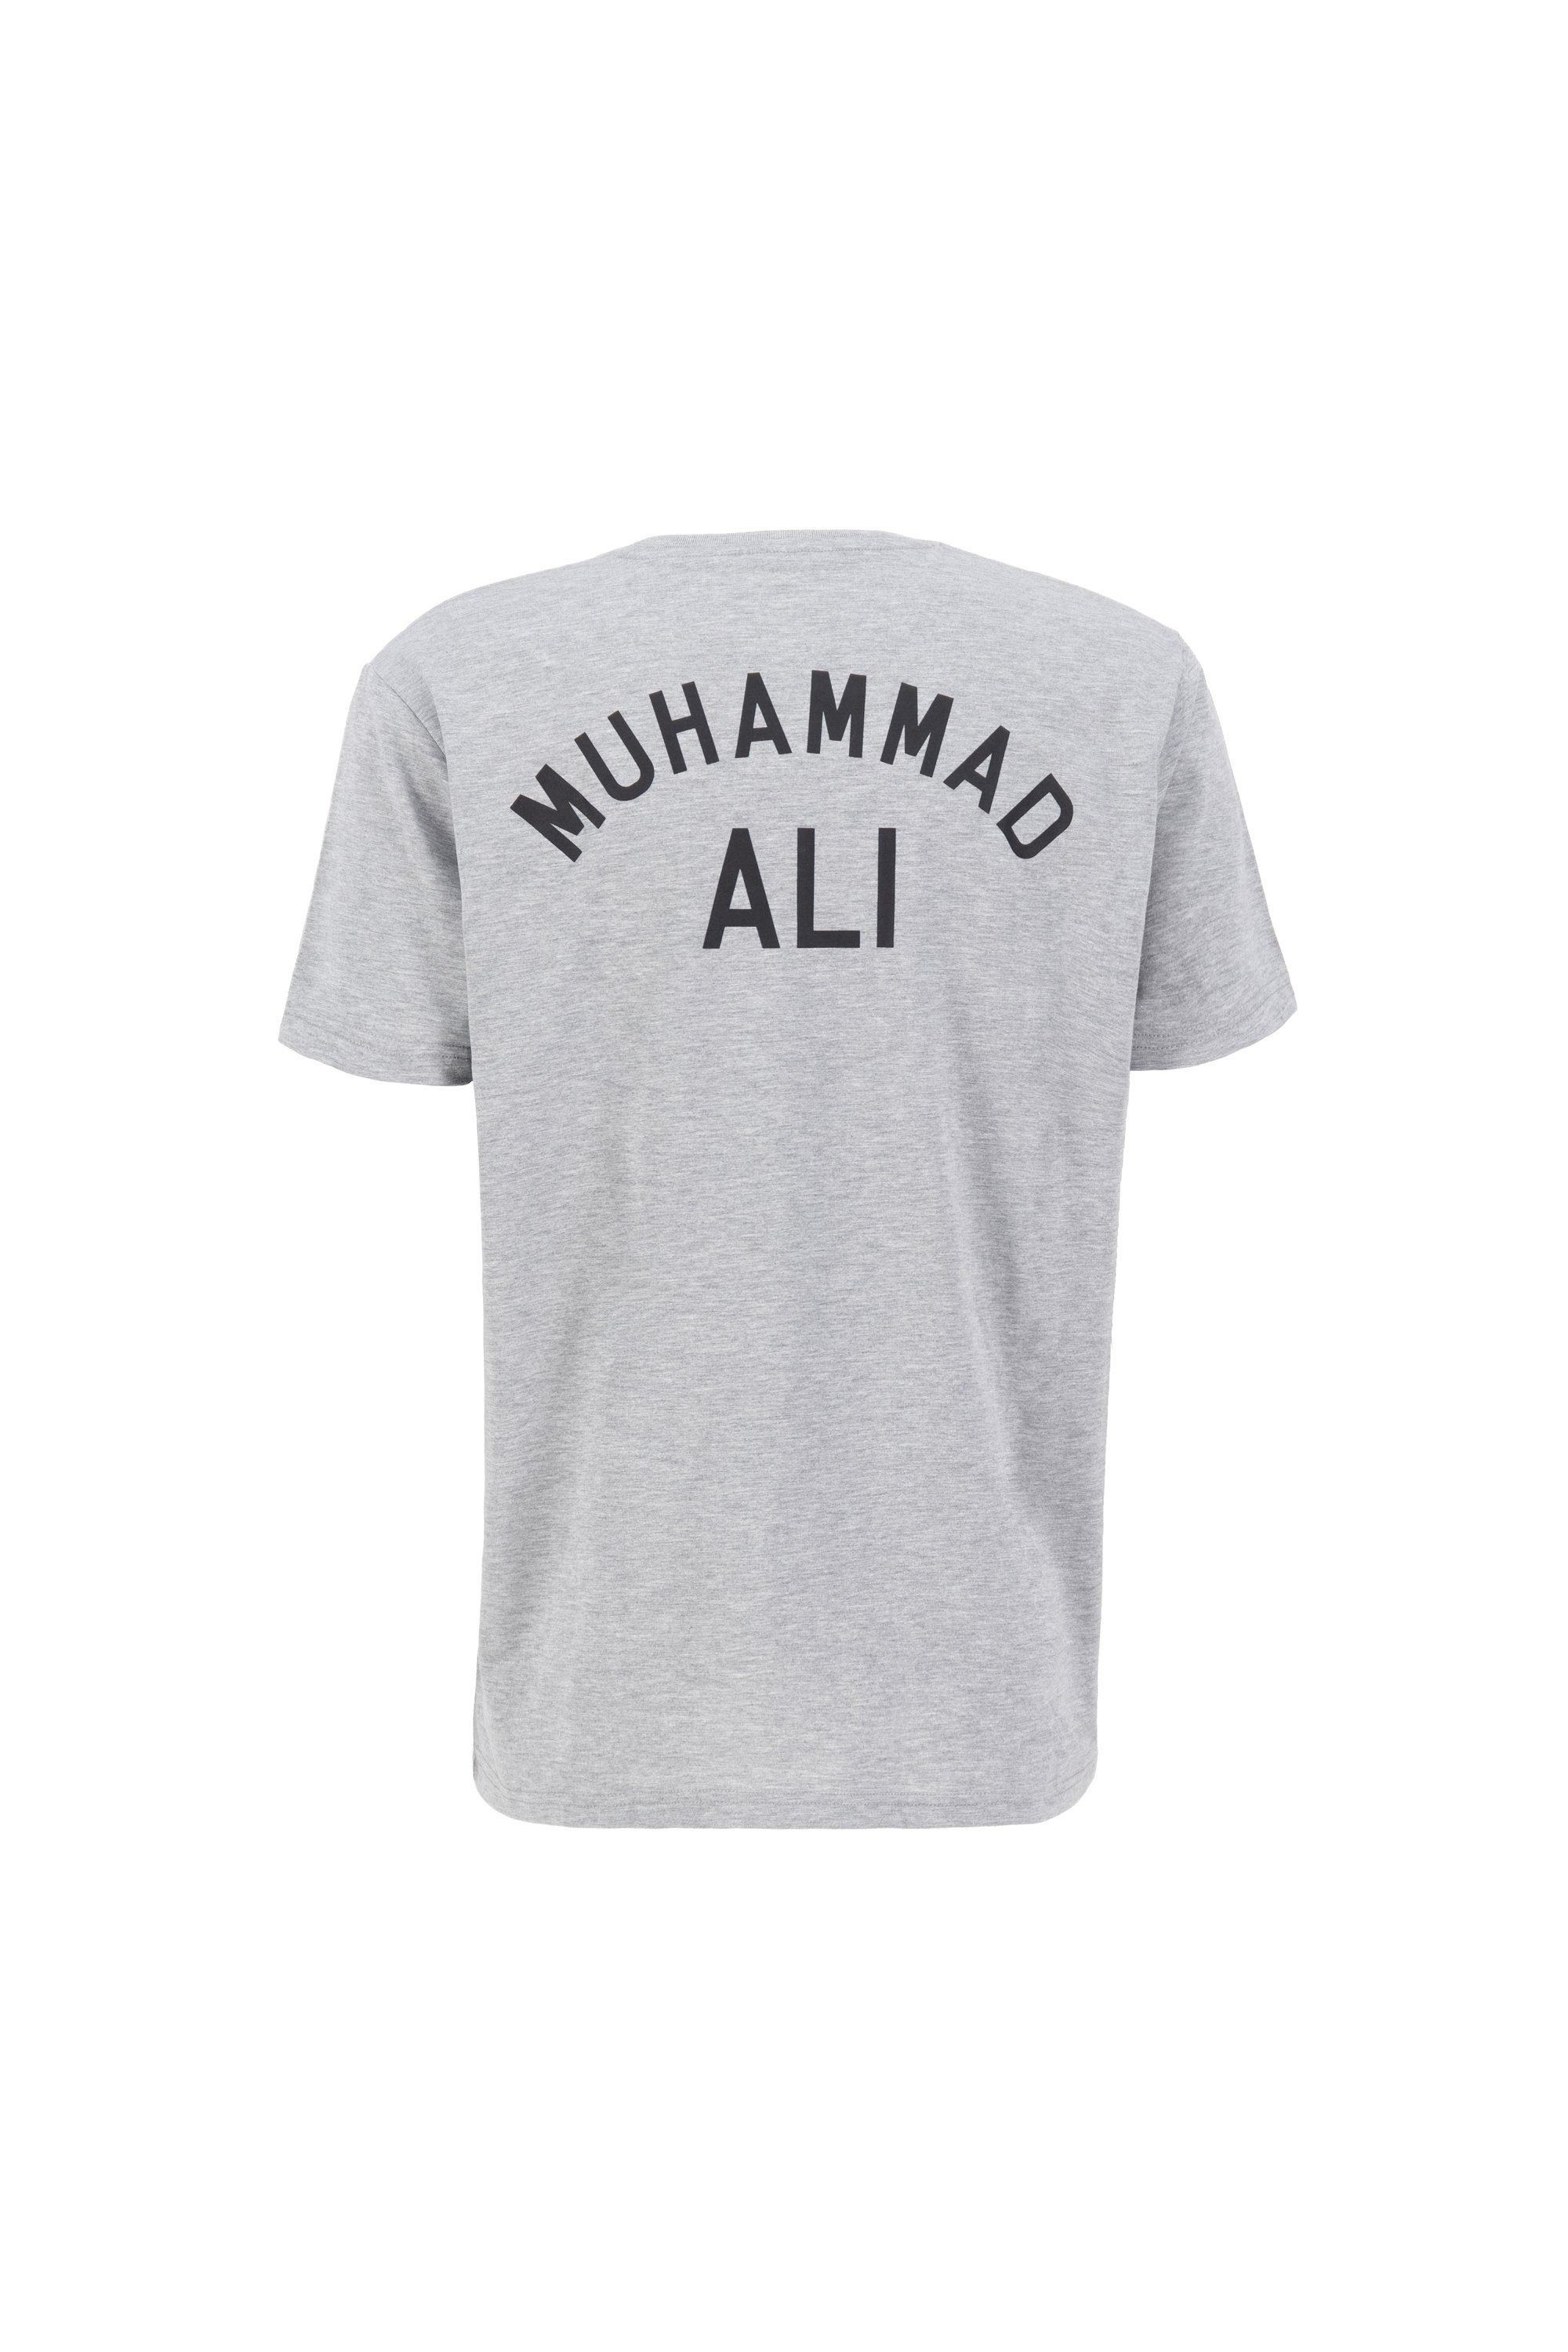 - T-Shirt Alpha Industries Men Ali grey heather T Muhammad Industries BP Alpha T-Shirts